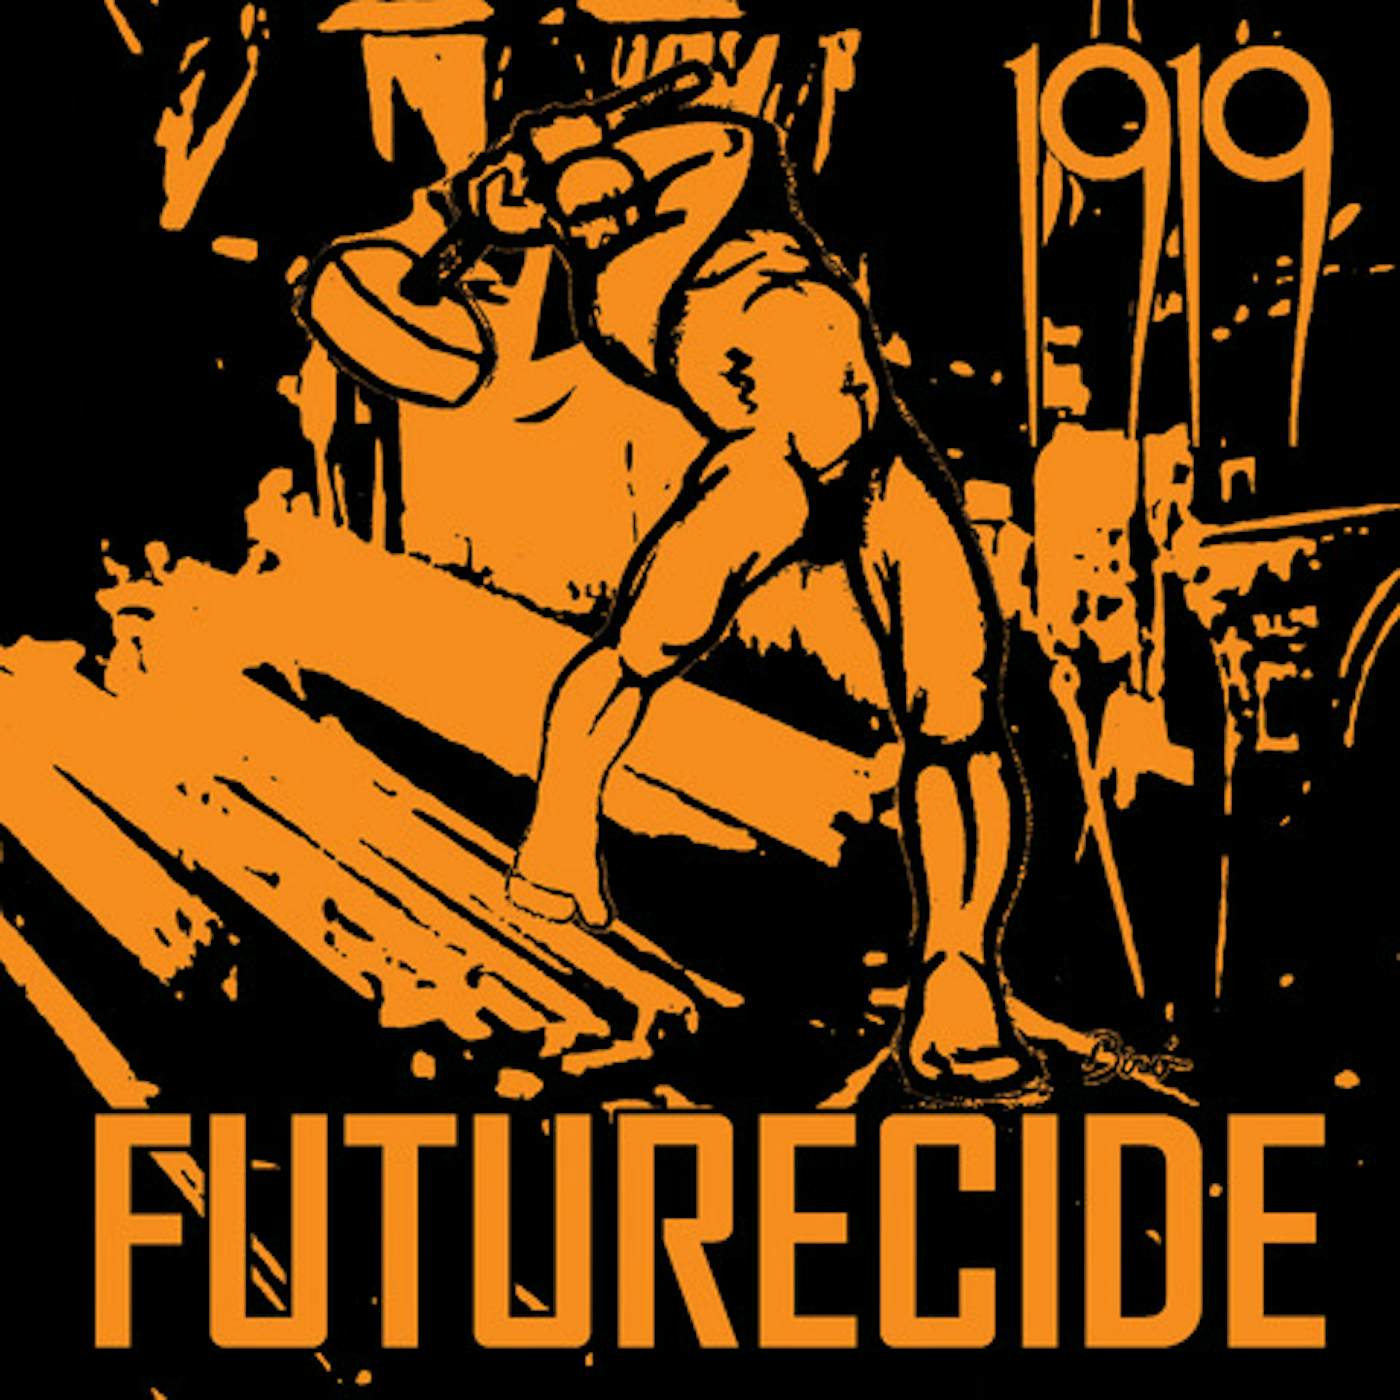 1919 FUTURECIDE CD